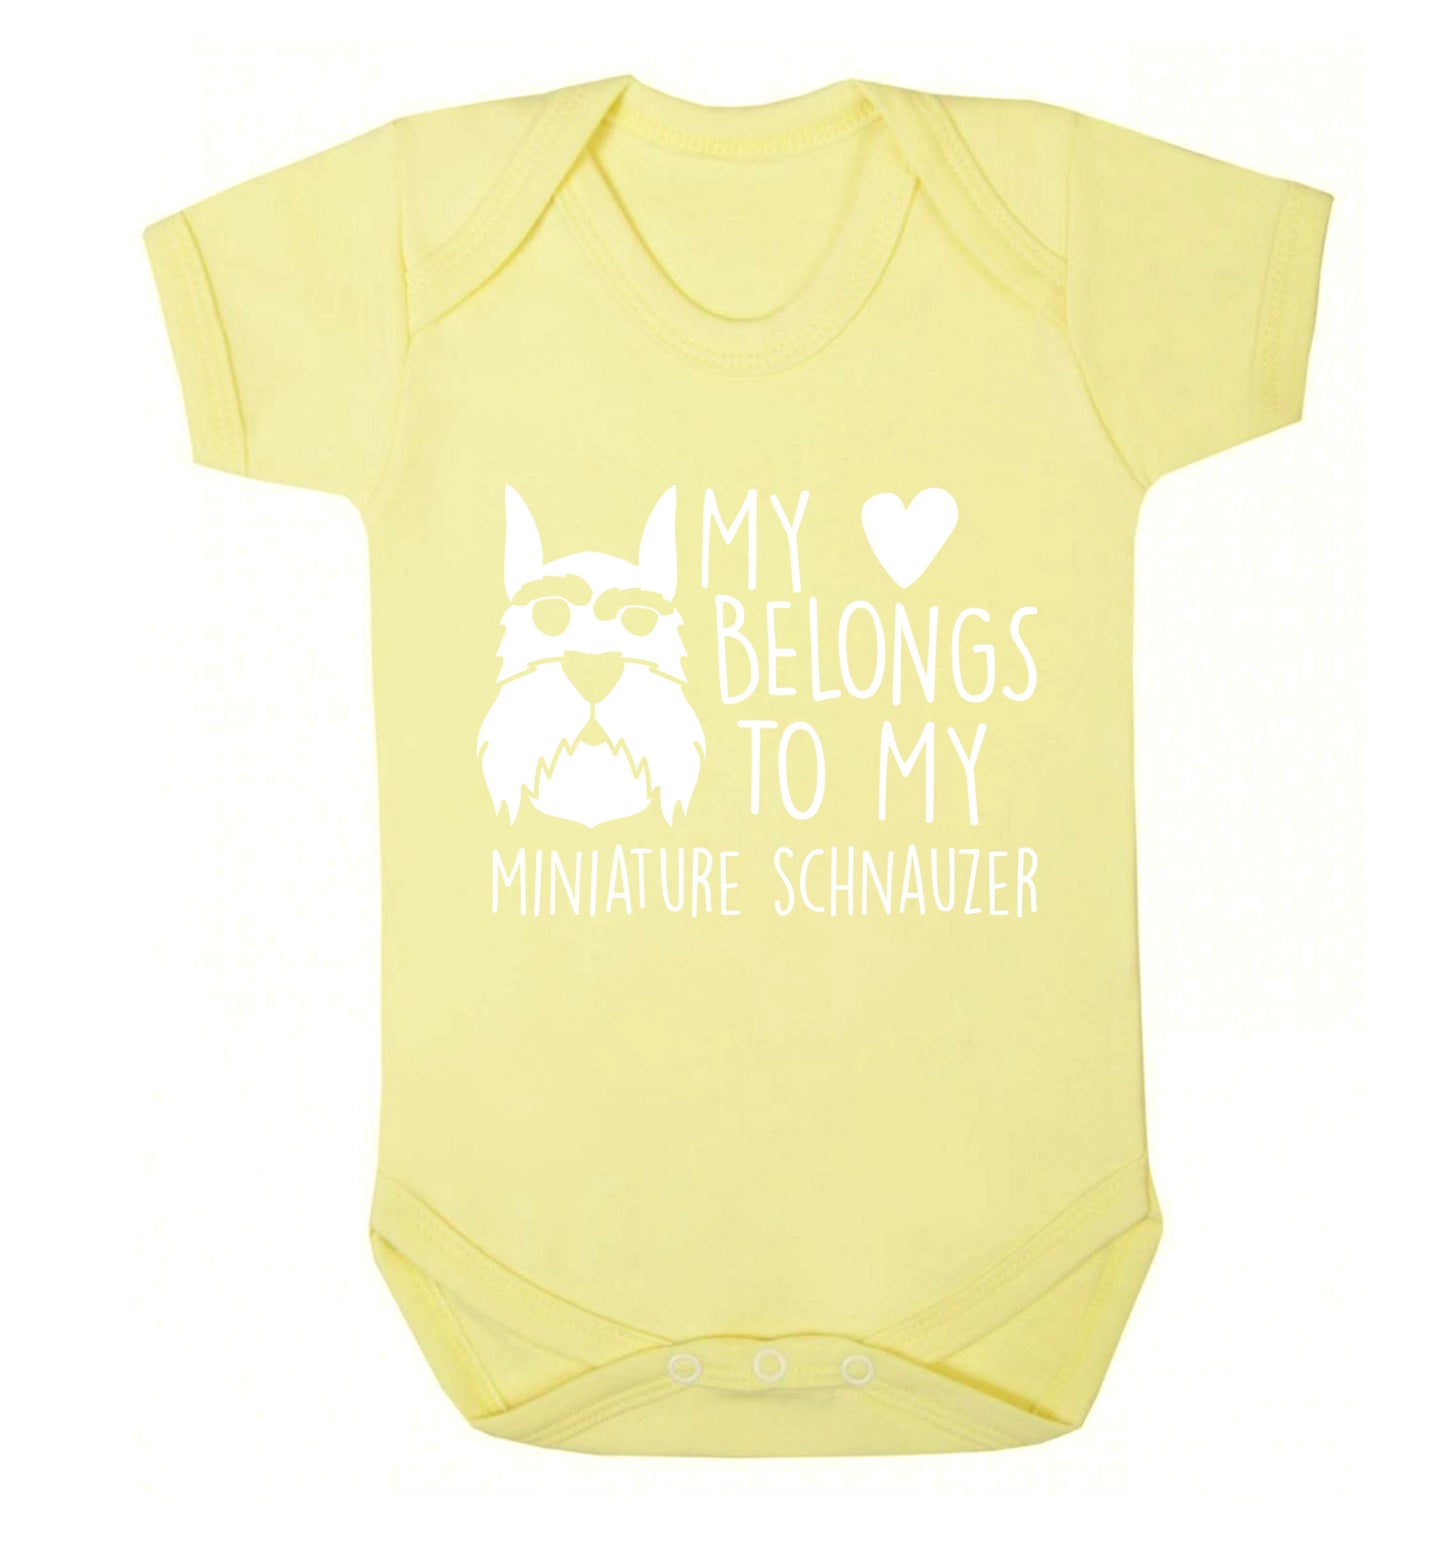 My heart belongs to my miniature schnauzer Baby Vest pale yellow 18-24 months